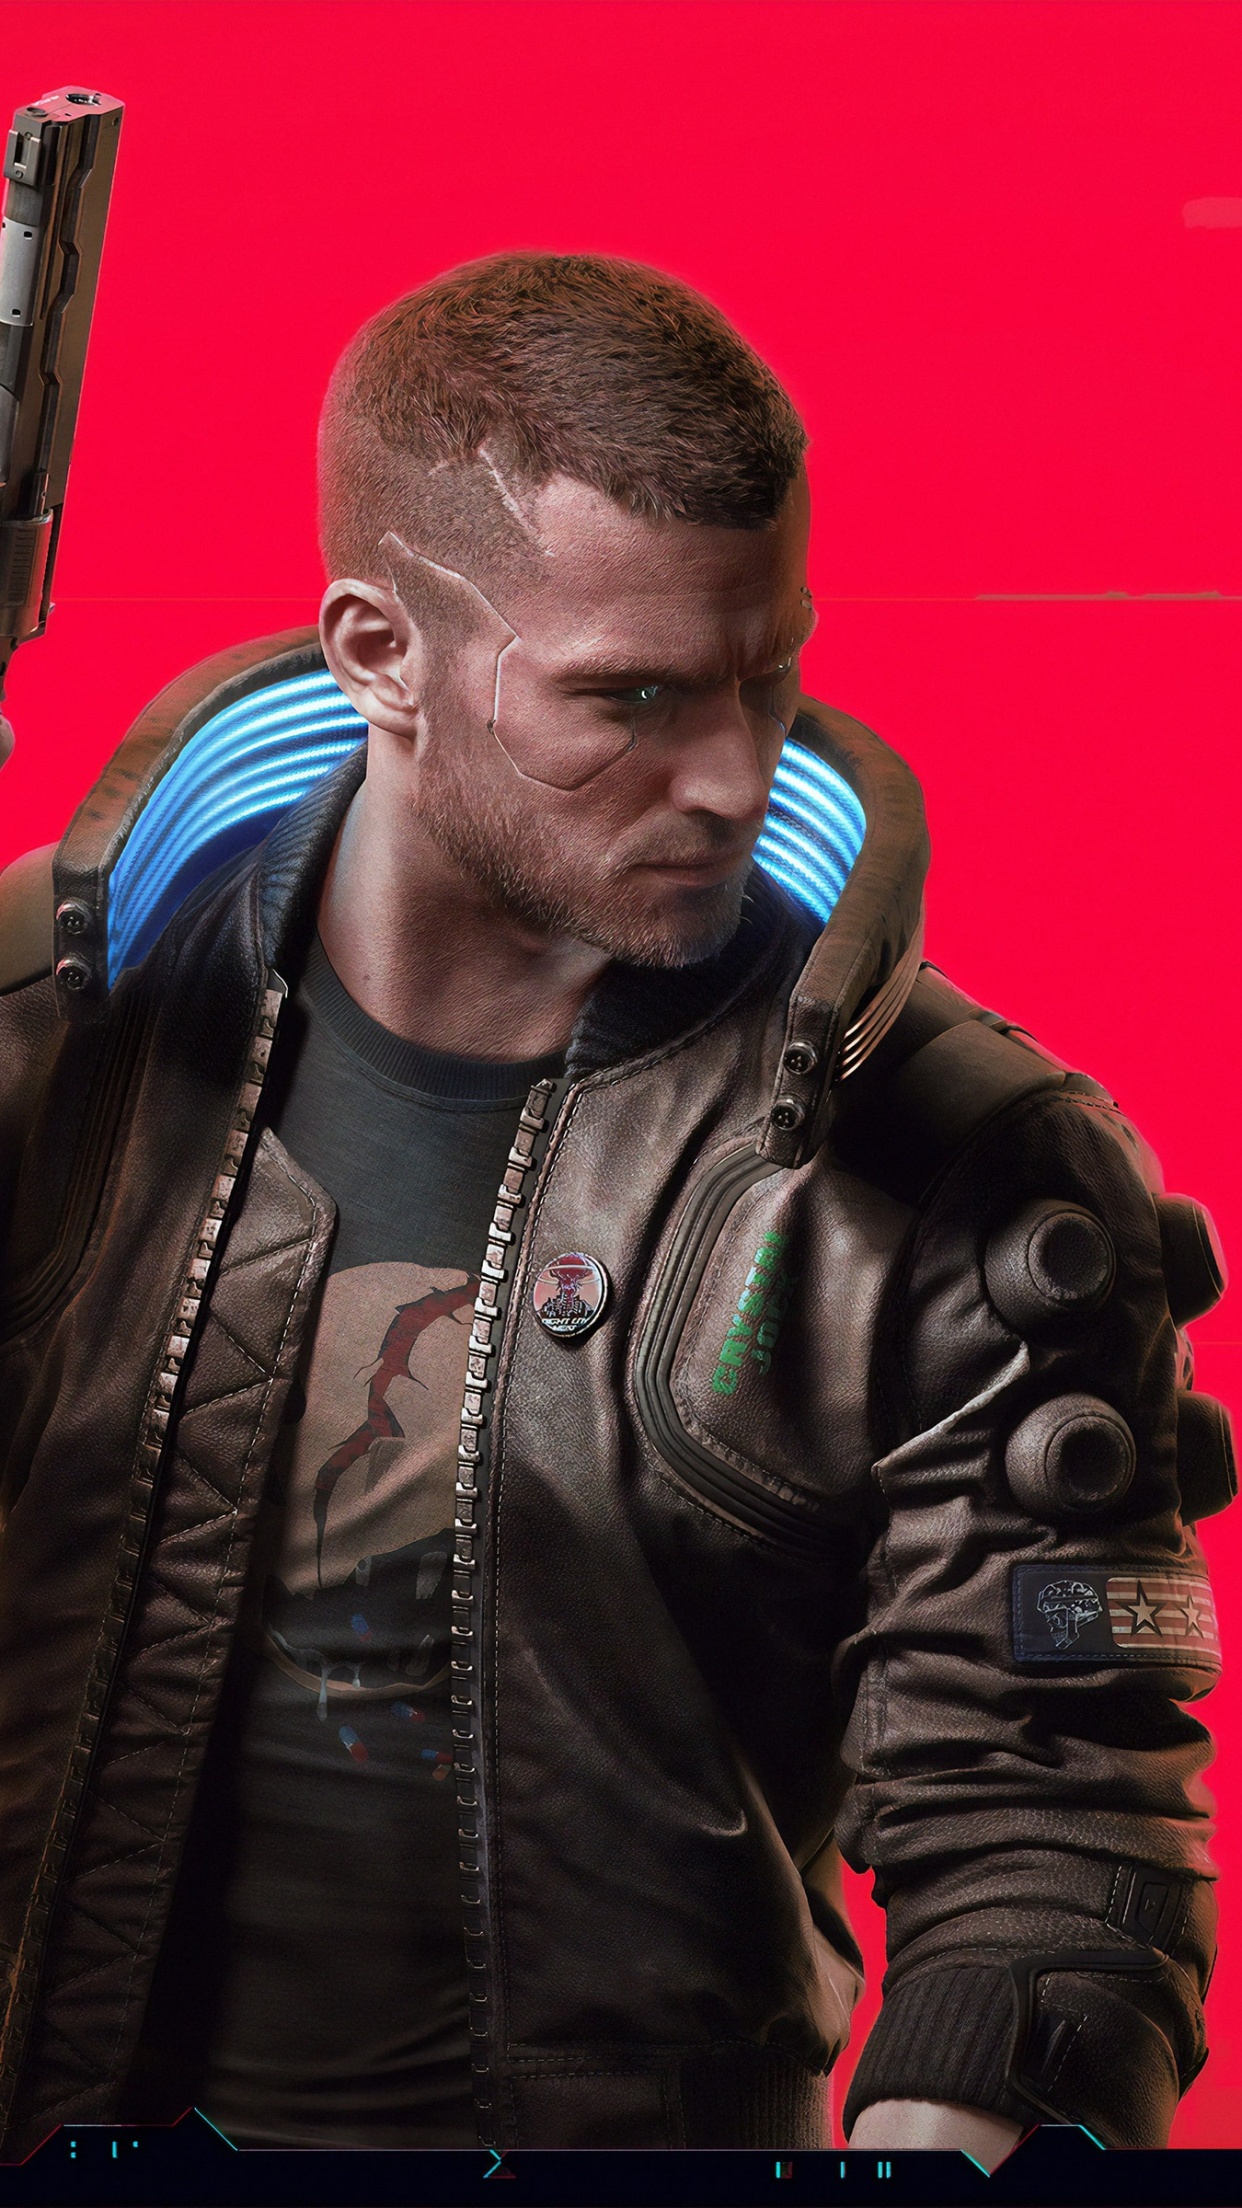 Cyberpunk 2077 4K Wallpaper, Character V, Red background, Xbox Series X